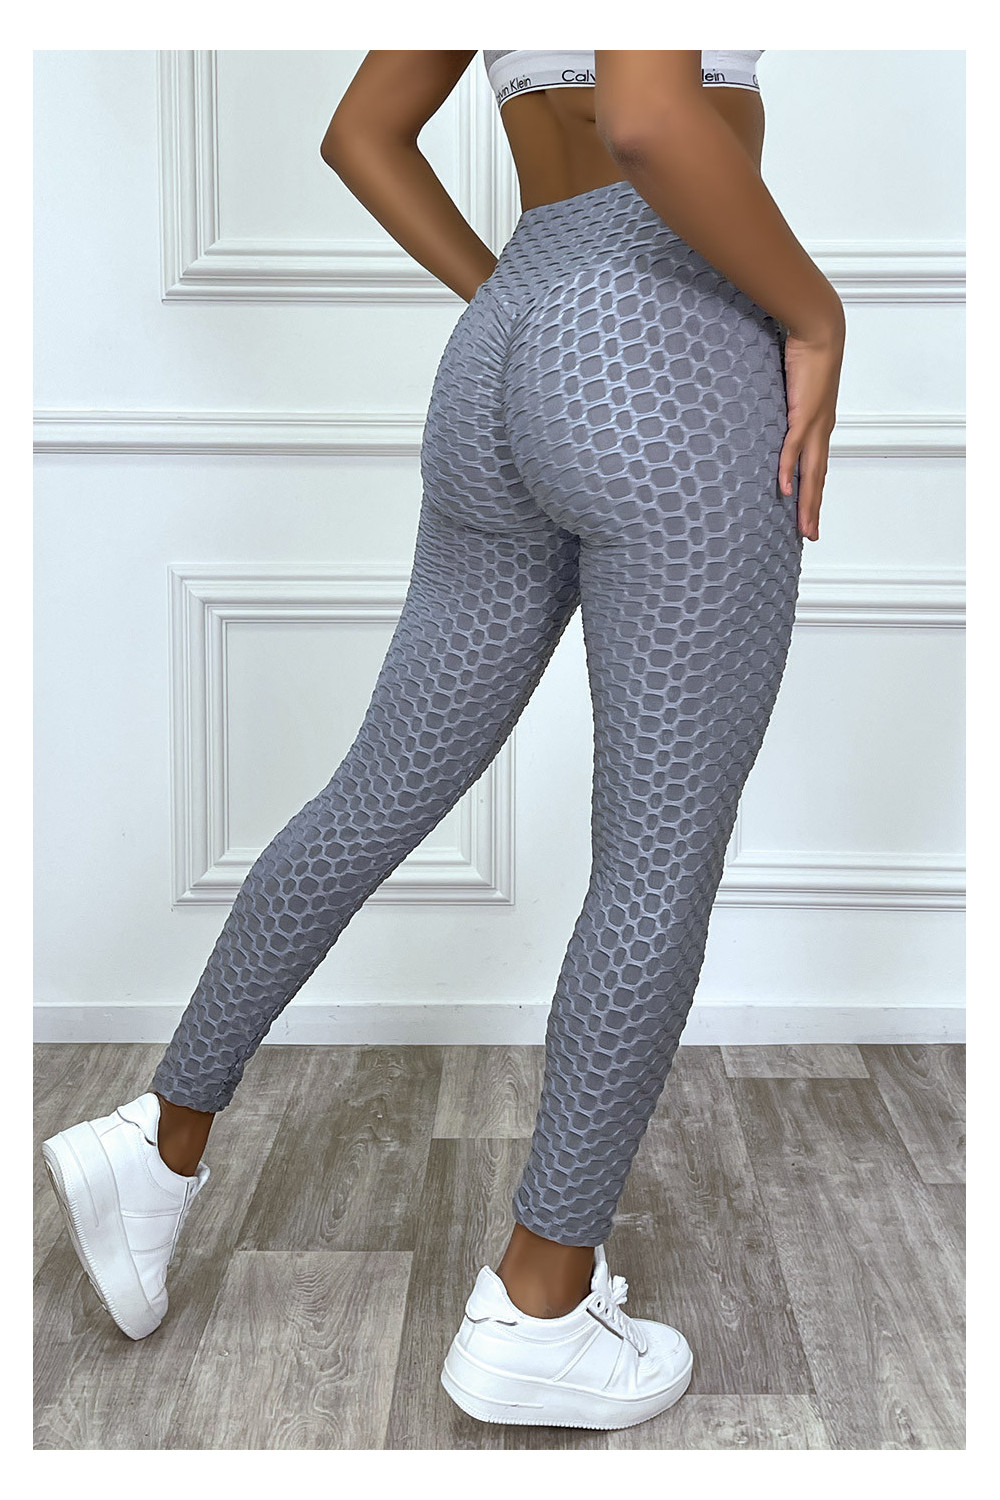 nacimiento alma pala Women's fashion sportwear merchant site - Gray push-up leggings